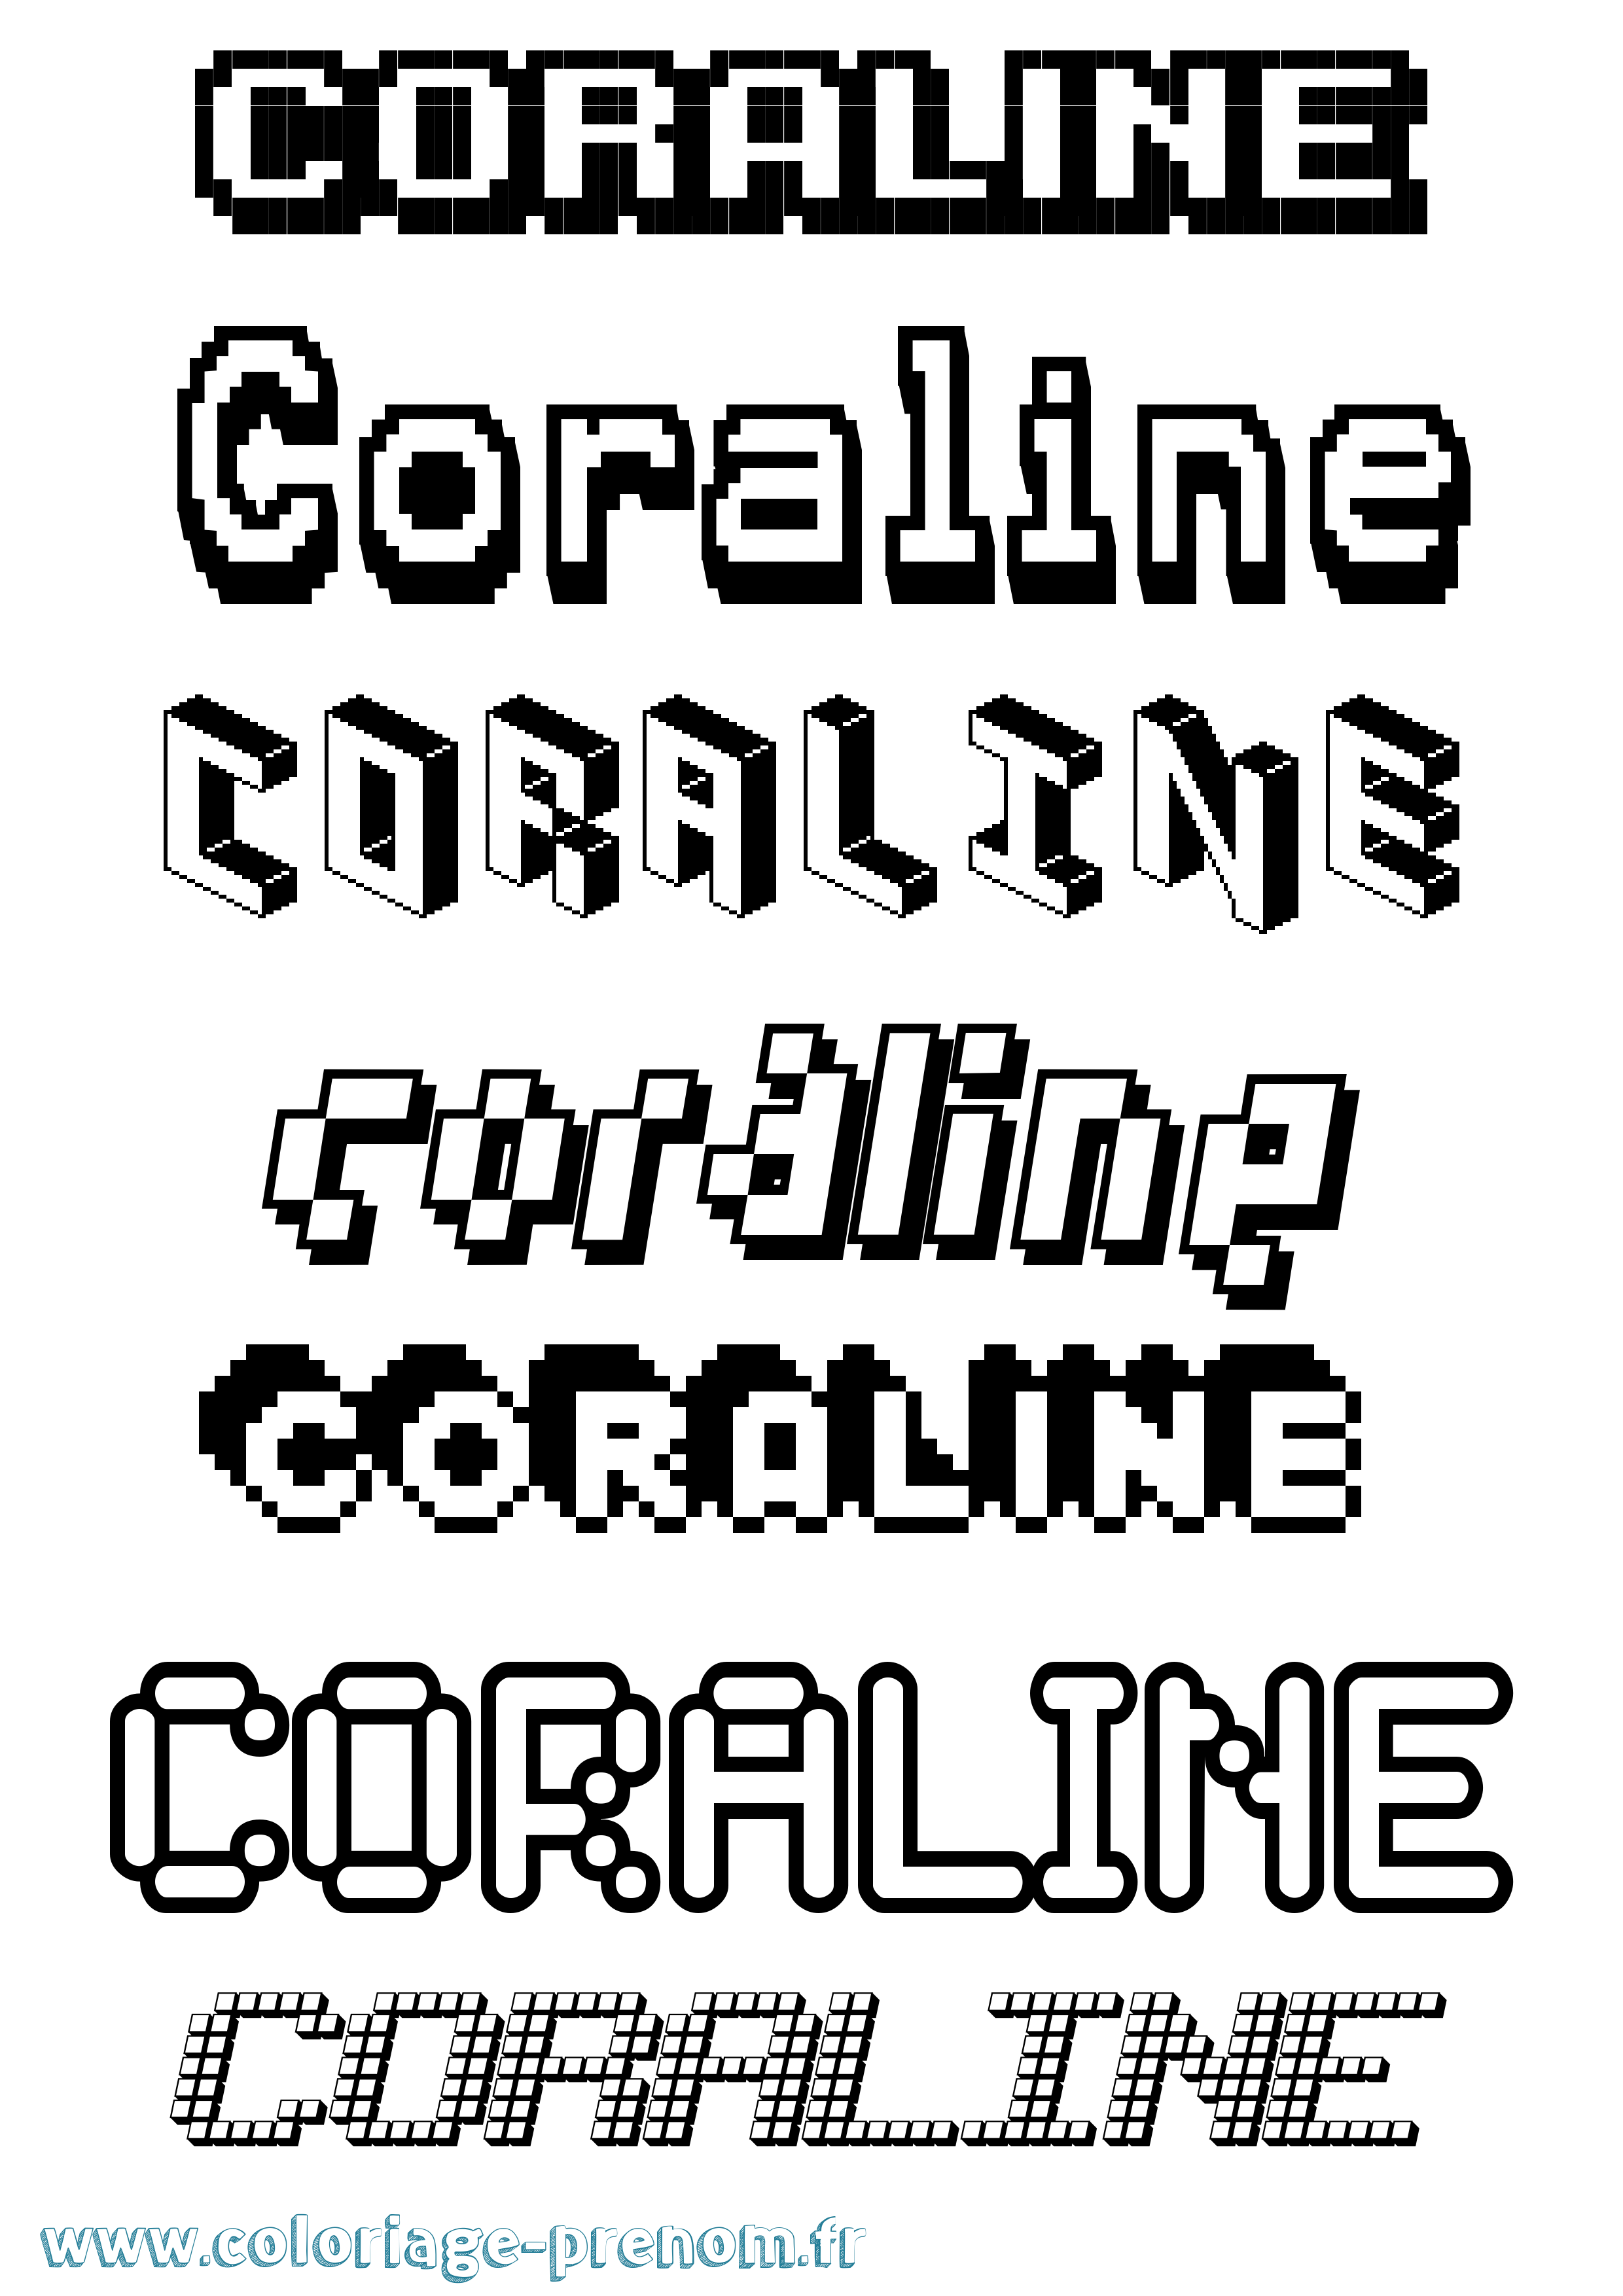 Coloriage prénom Coraline